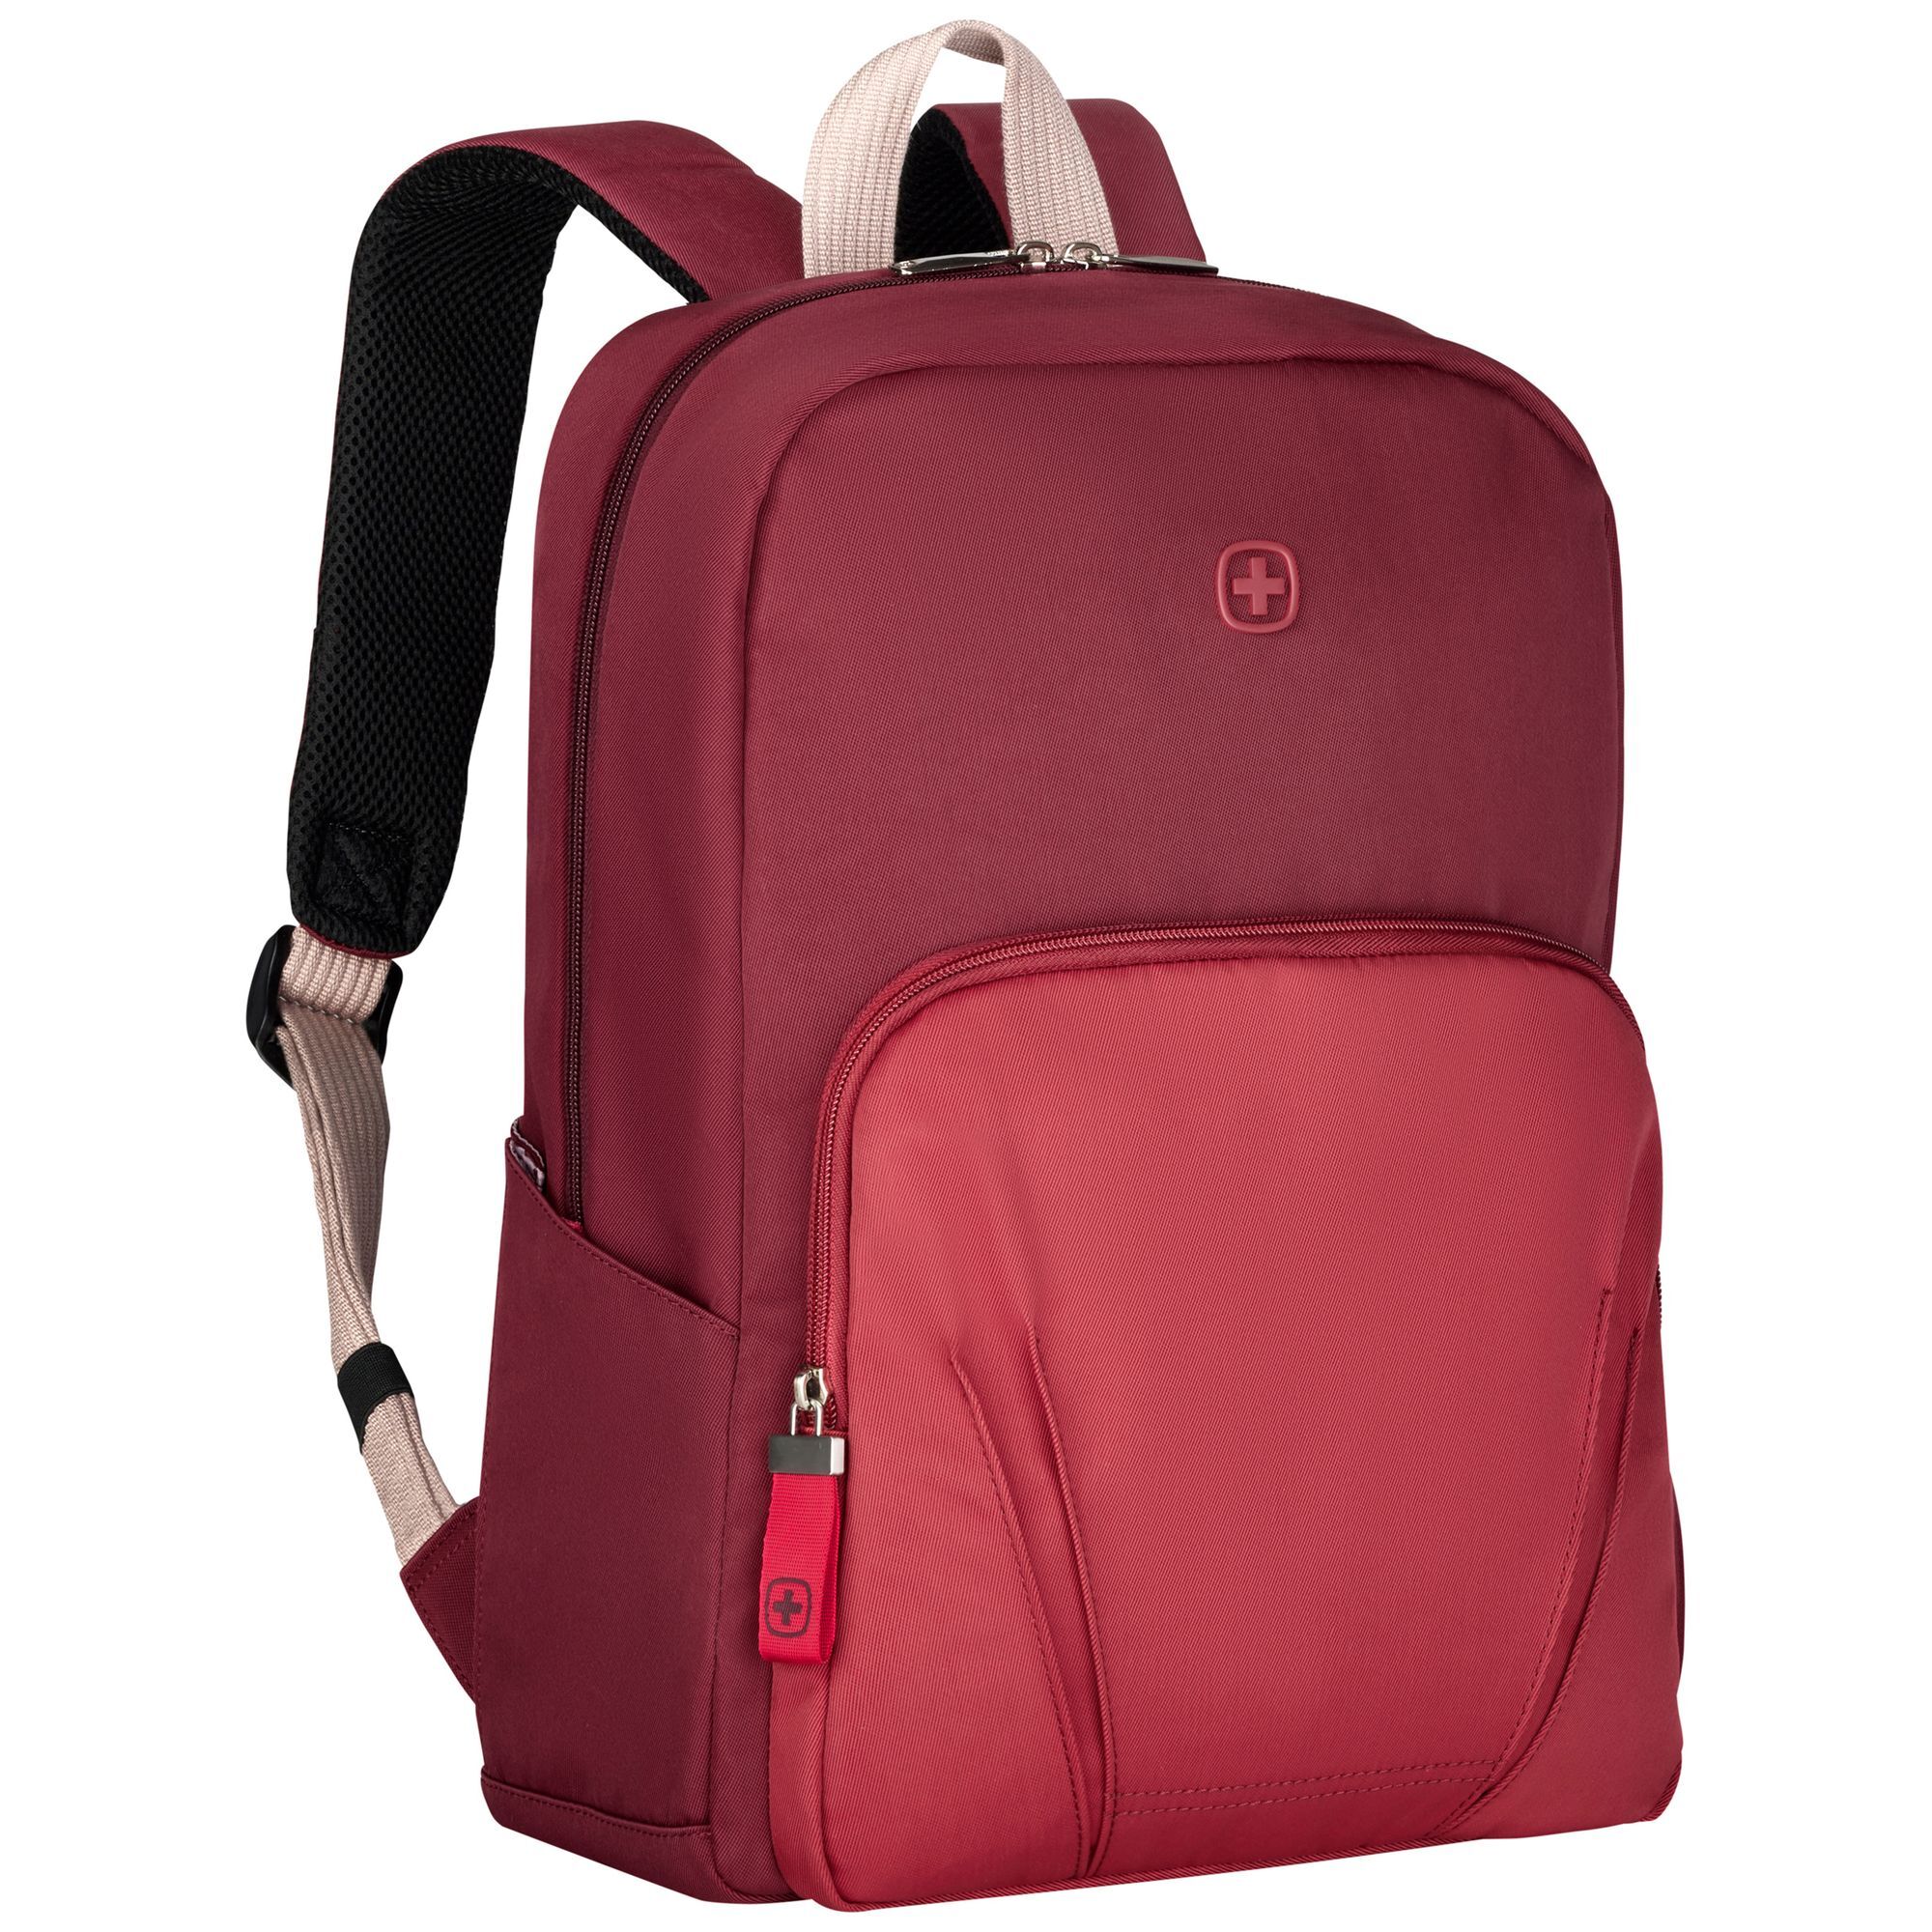 Рюкзак Wenger Motion 42 cm Laptopfach, цвет digital red рюкзак wenger reload 14 42 cm laptopfach черный